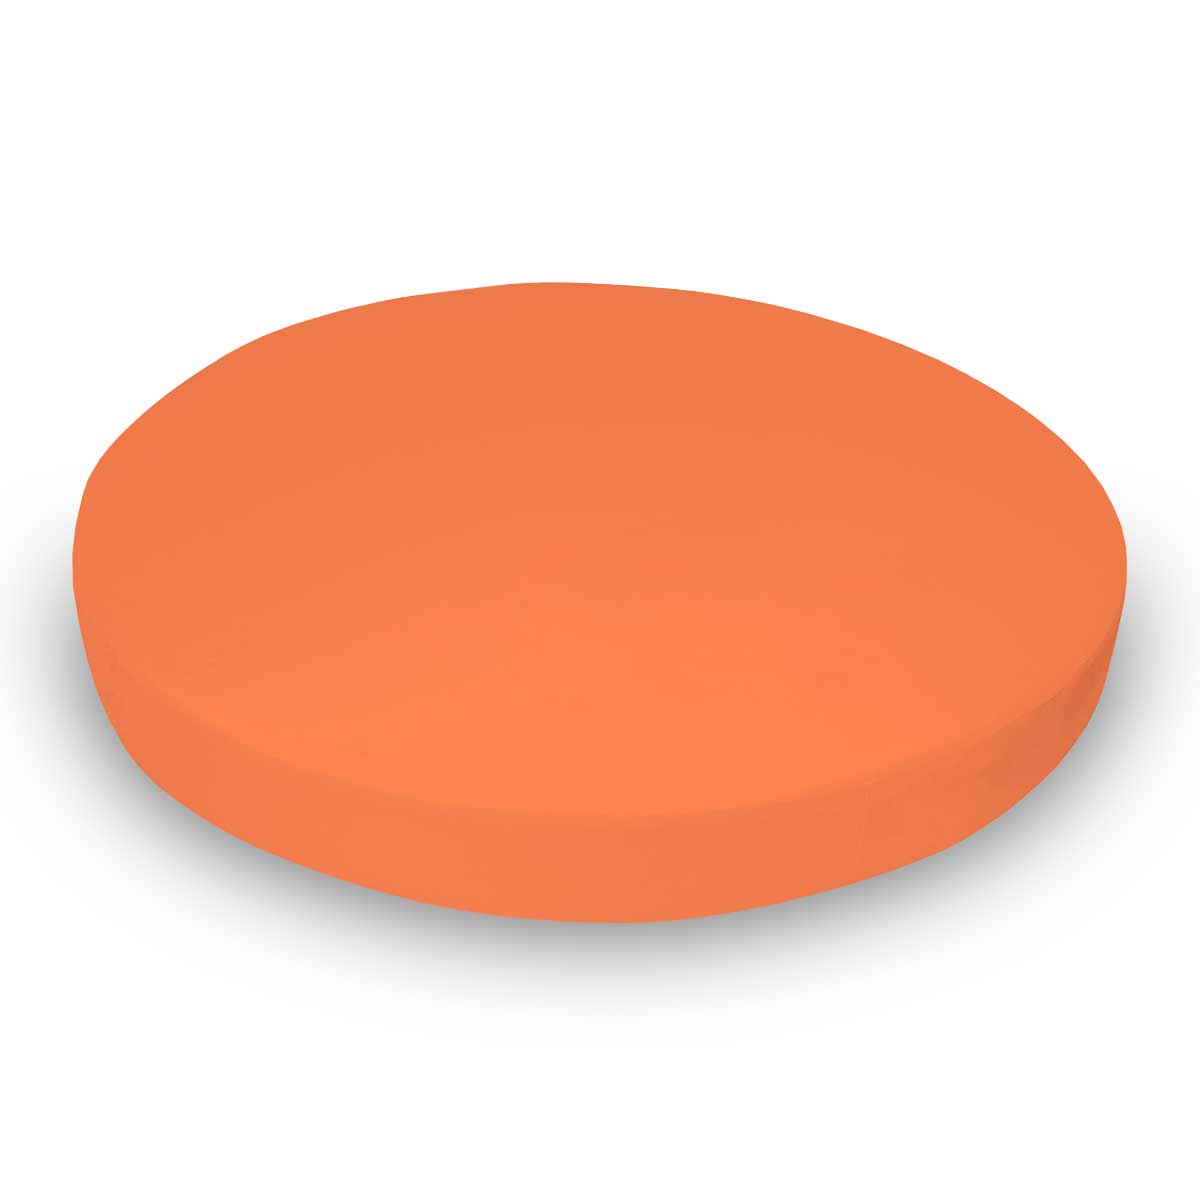 Oval Crib (Stokke Sleepi) - Burnt Orange Jersey Knit - Fitted  Oval